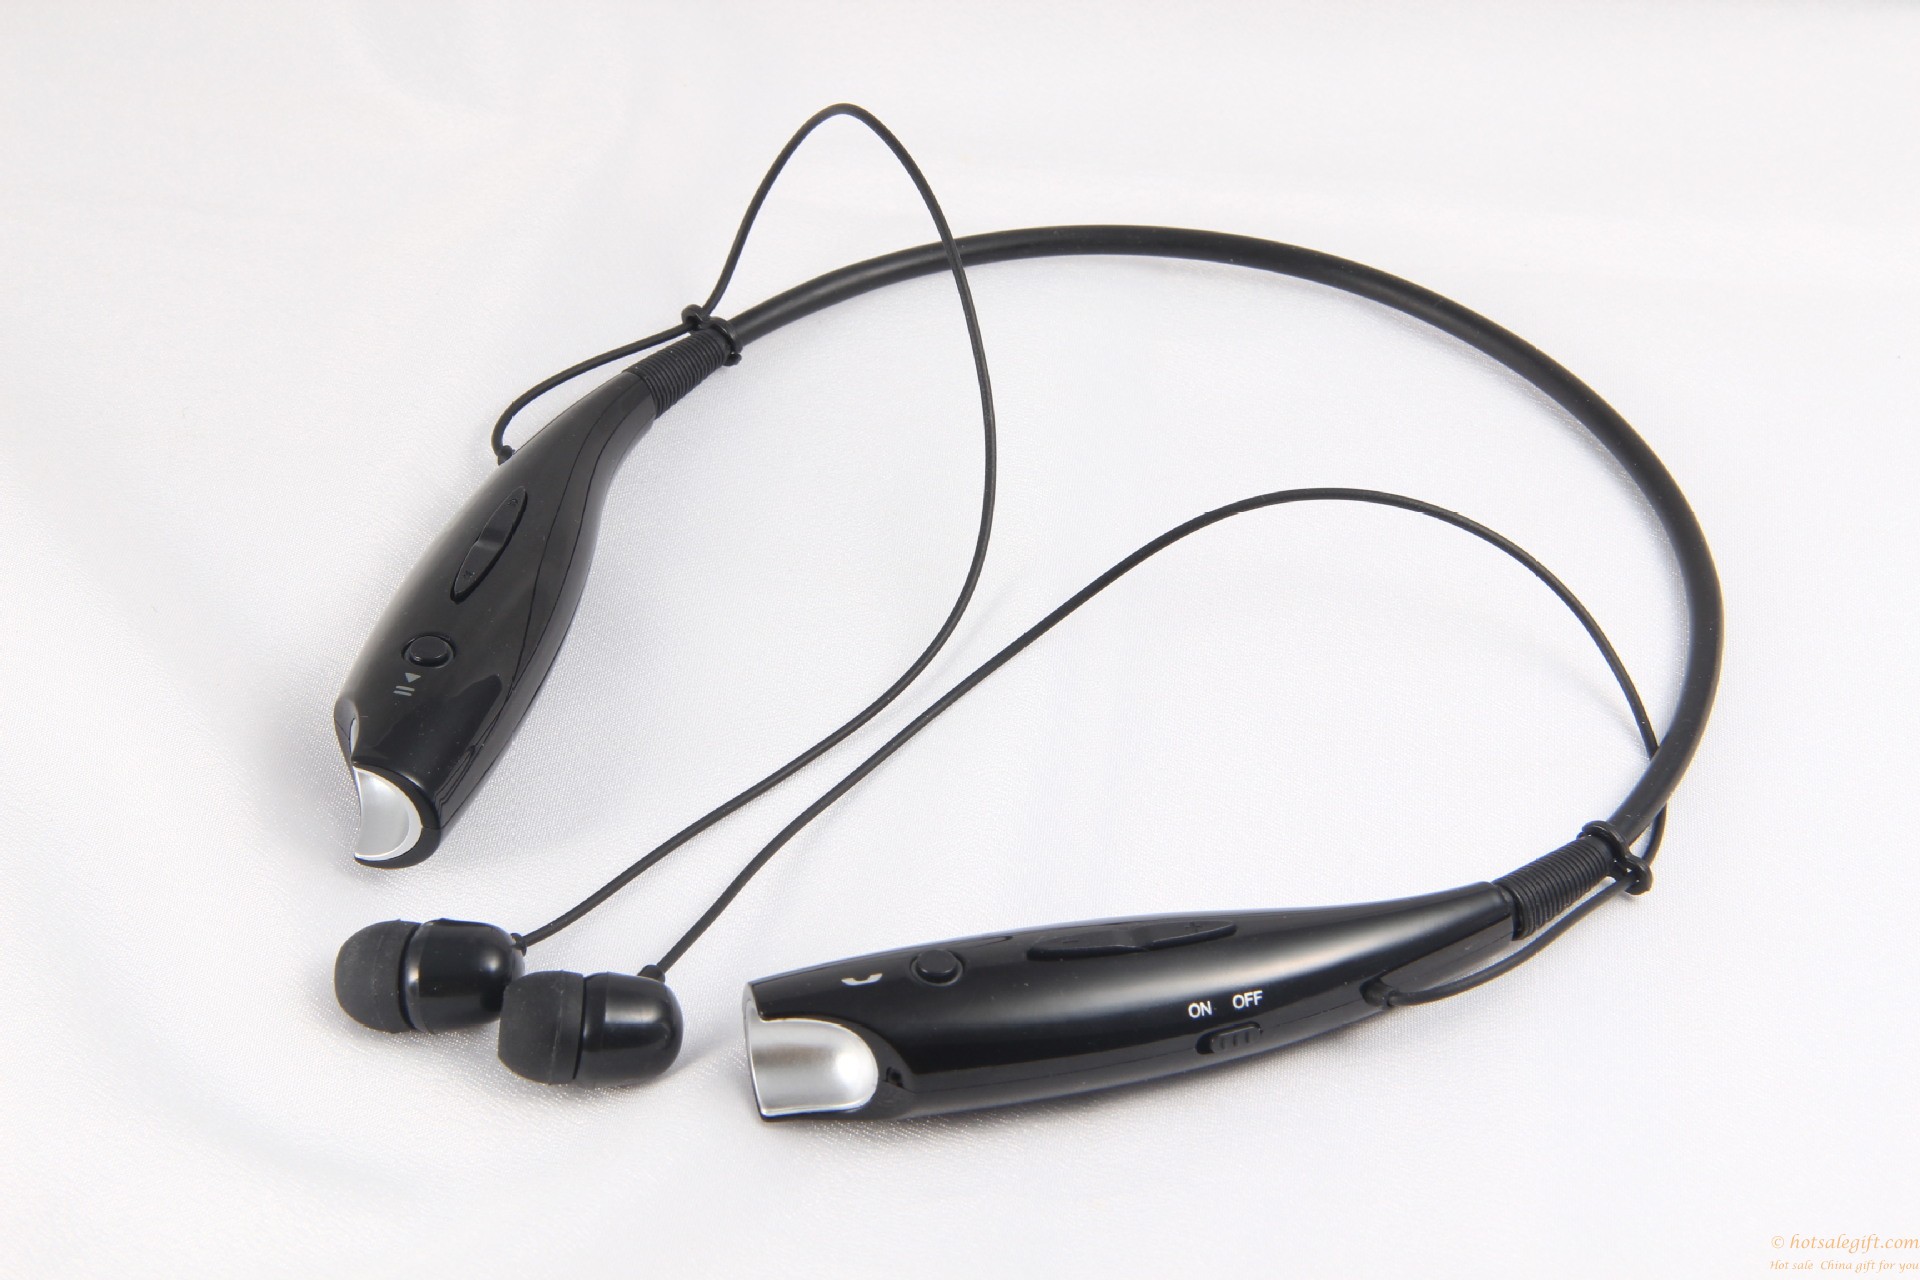 hotsalegift electronics tone bluetooth headphone headset hbs730 6